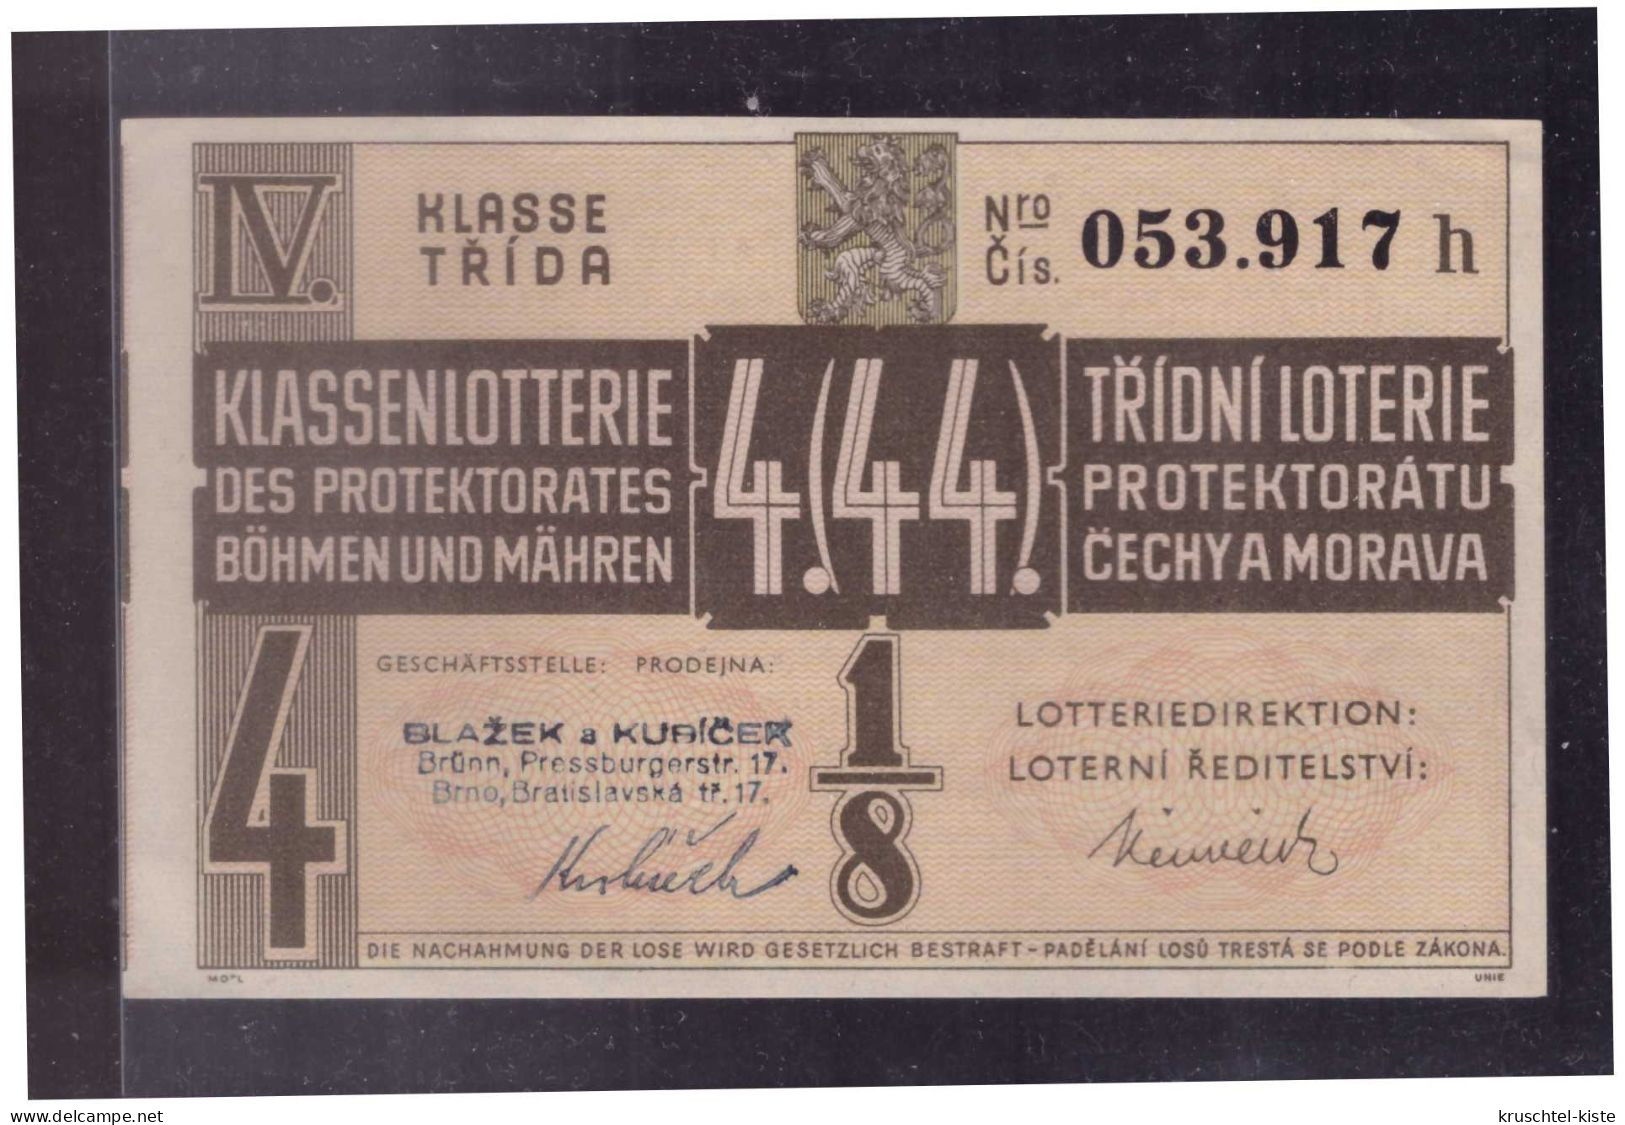 Böhmen Und Mähren (W00177) Lotterielos 1/8 Ziehung 20.3.1941 - Covers & Documents